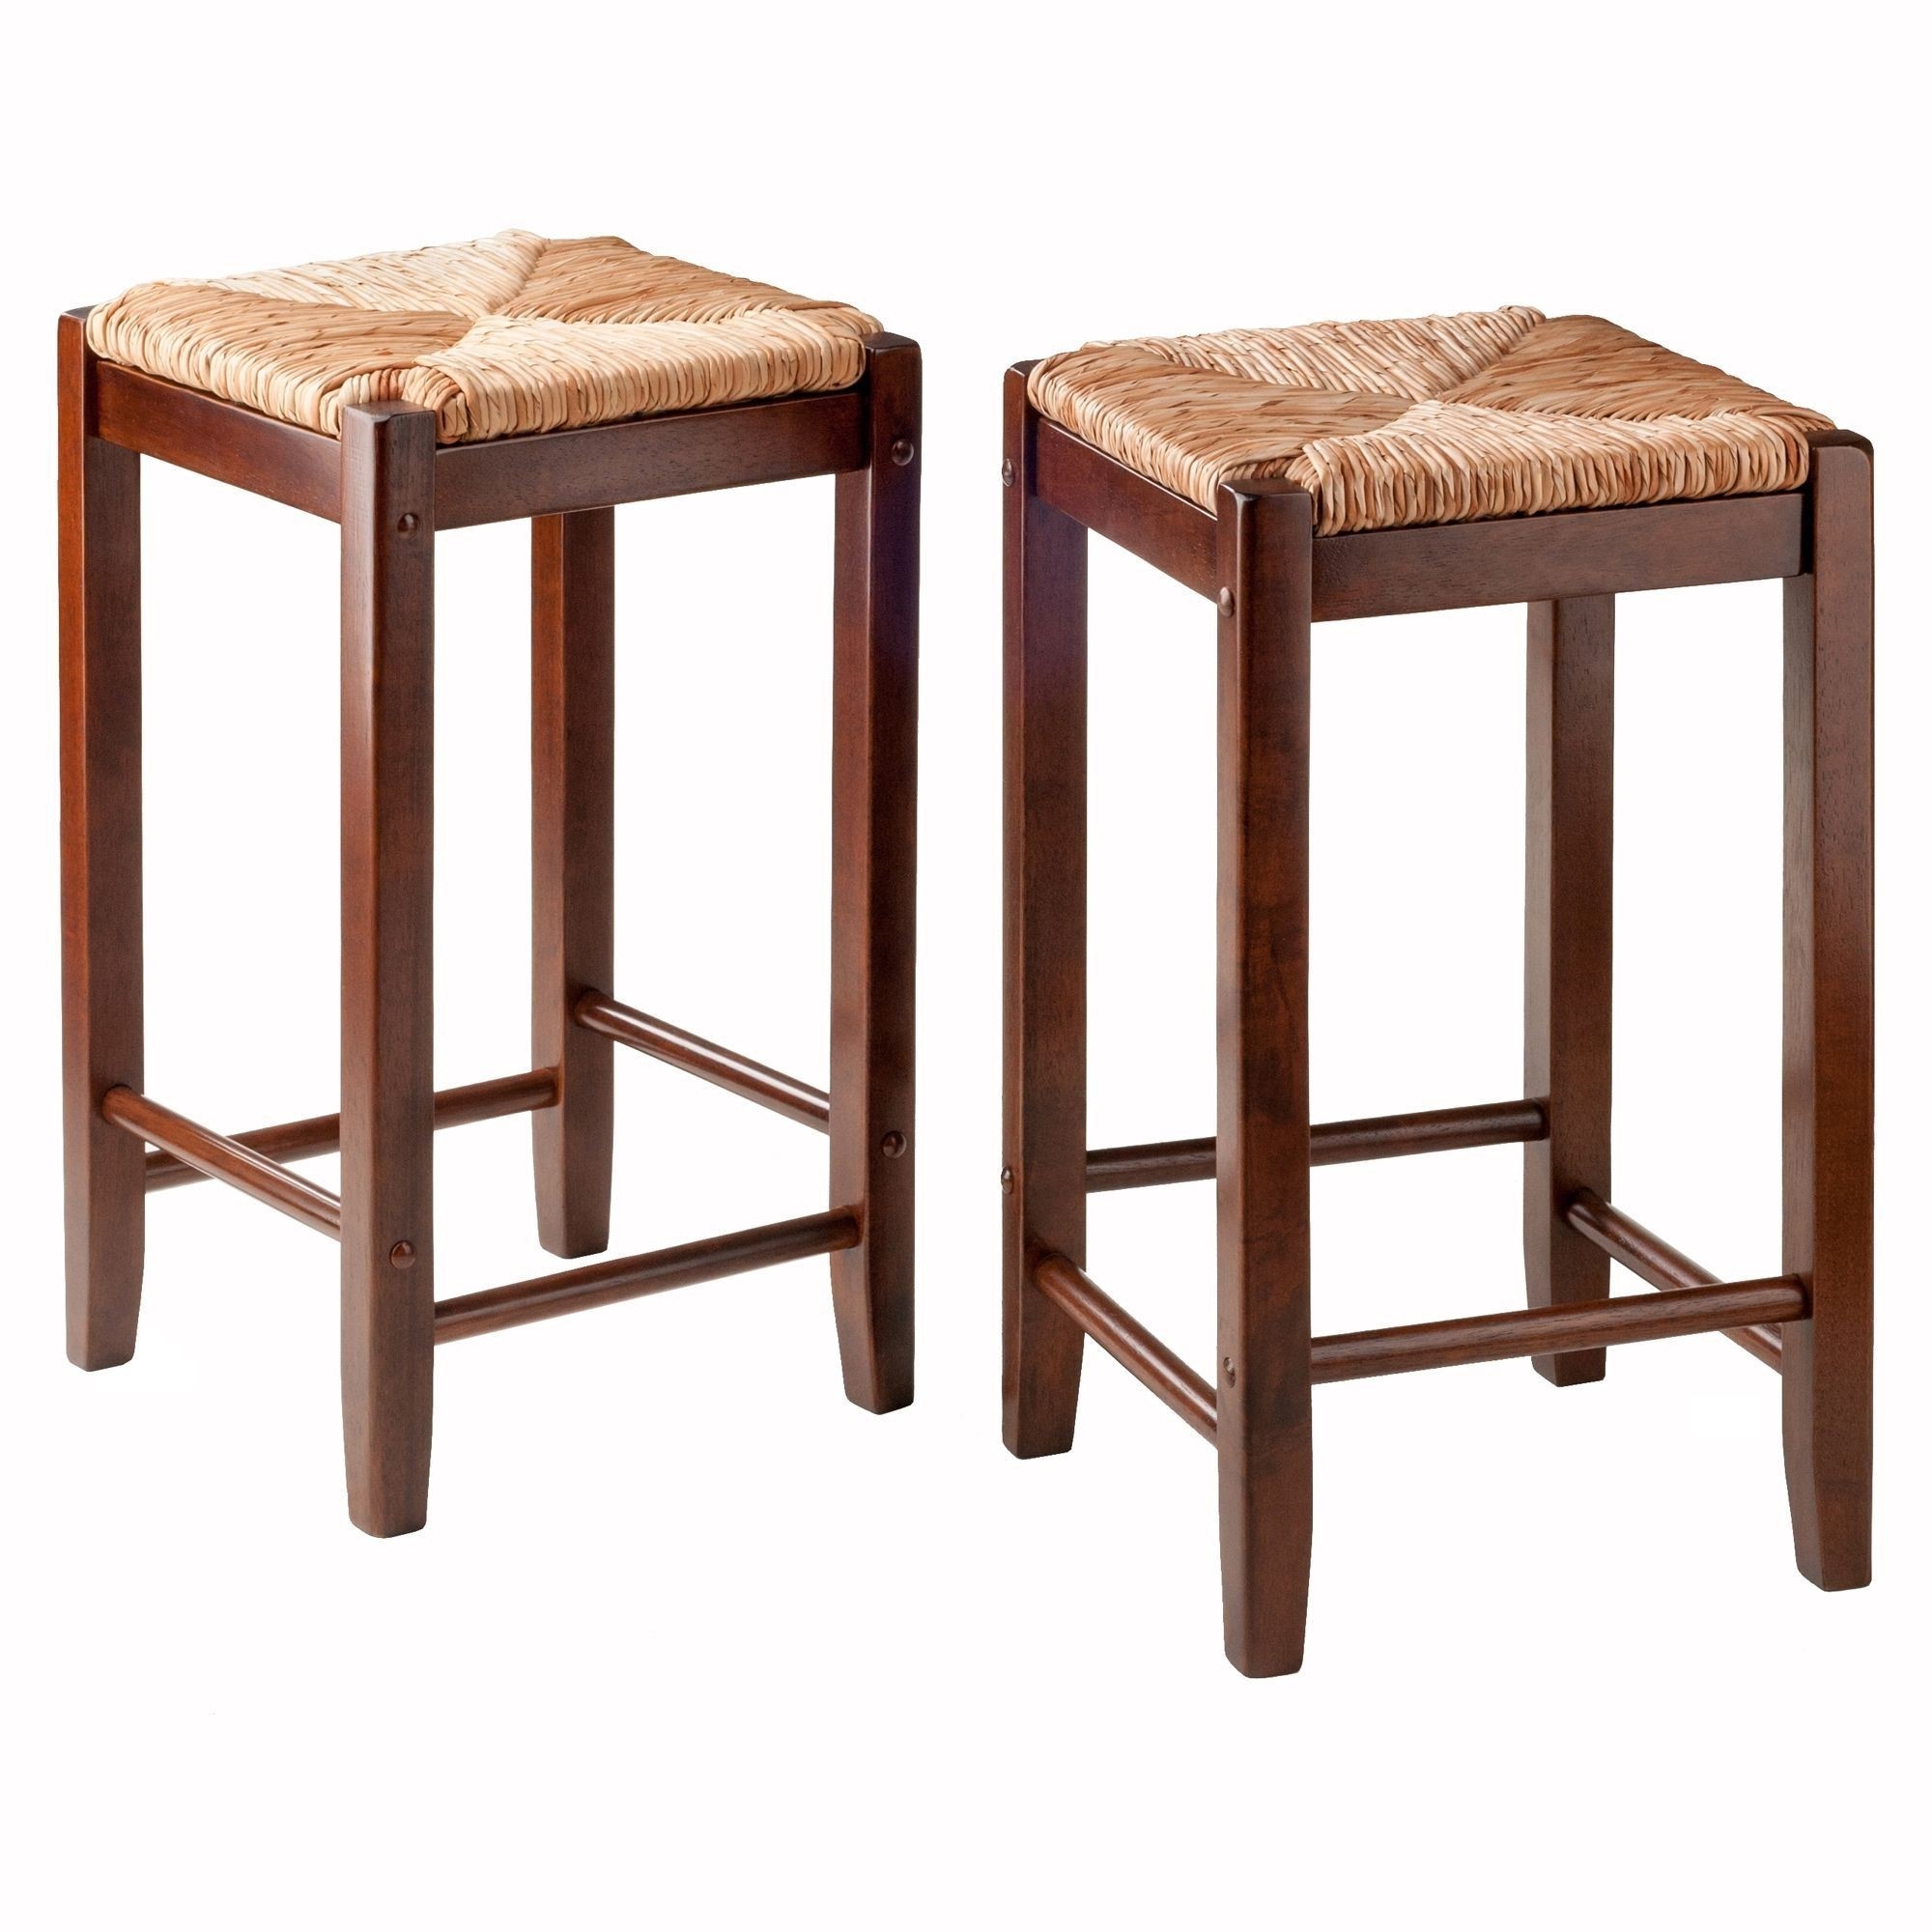 Kaden walnut rush seat counter stool set of 2 from